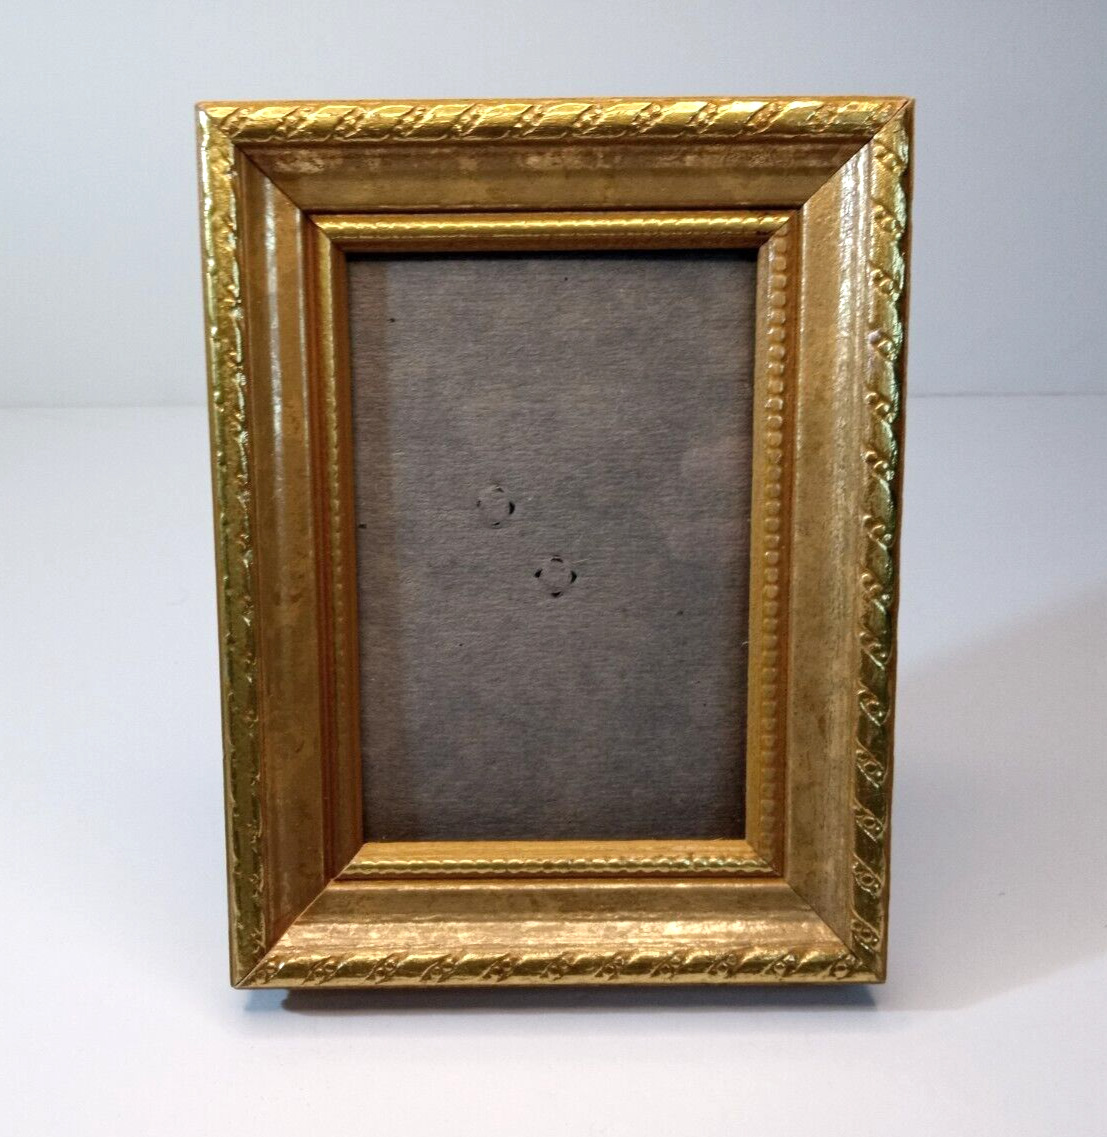 Vintage Ornate Gold Gild Design Picture Frame Wood & Glass 5 x 6.5 Holds 4 x 3